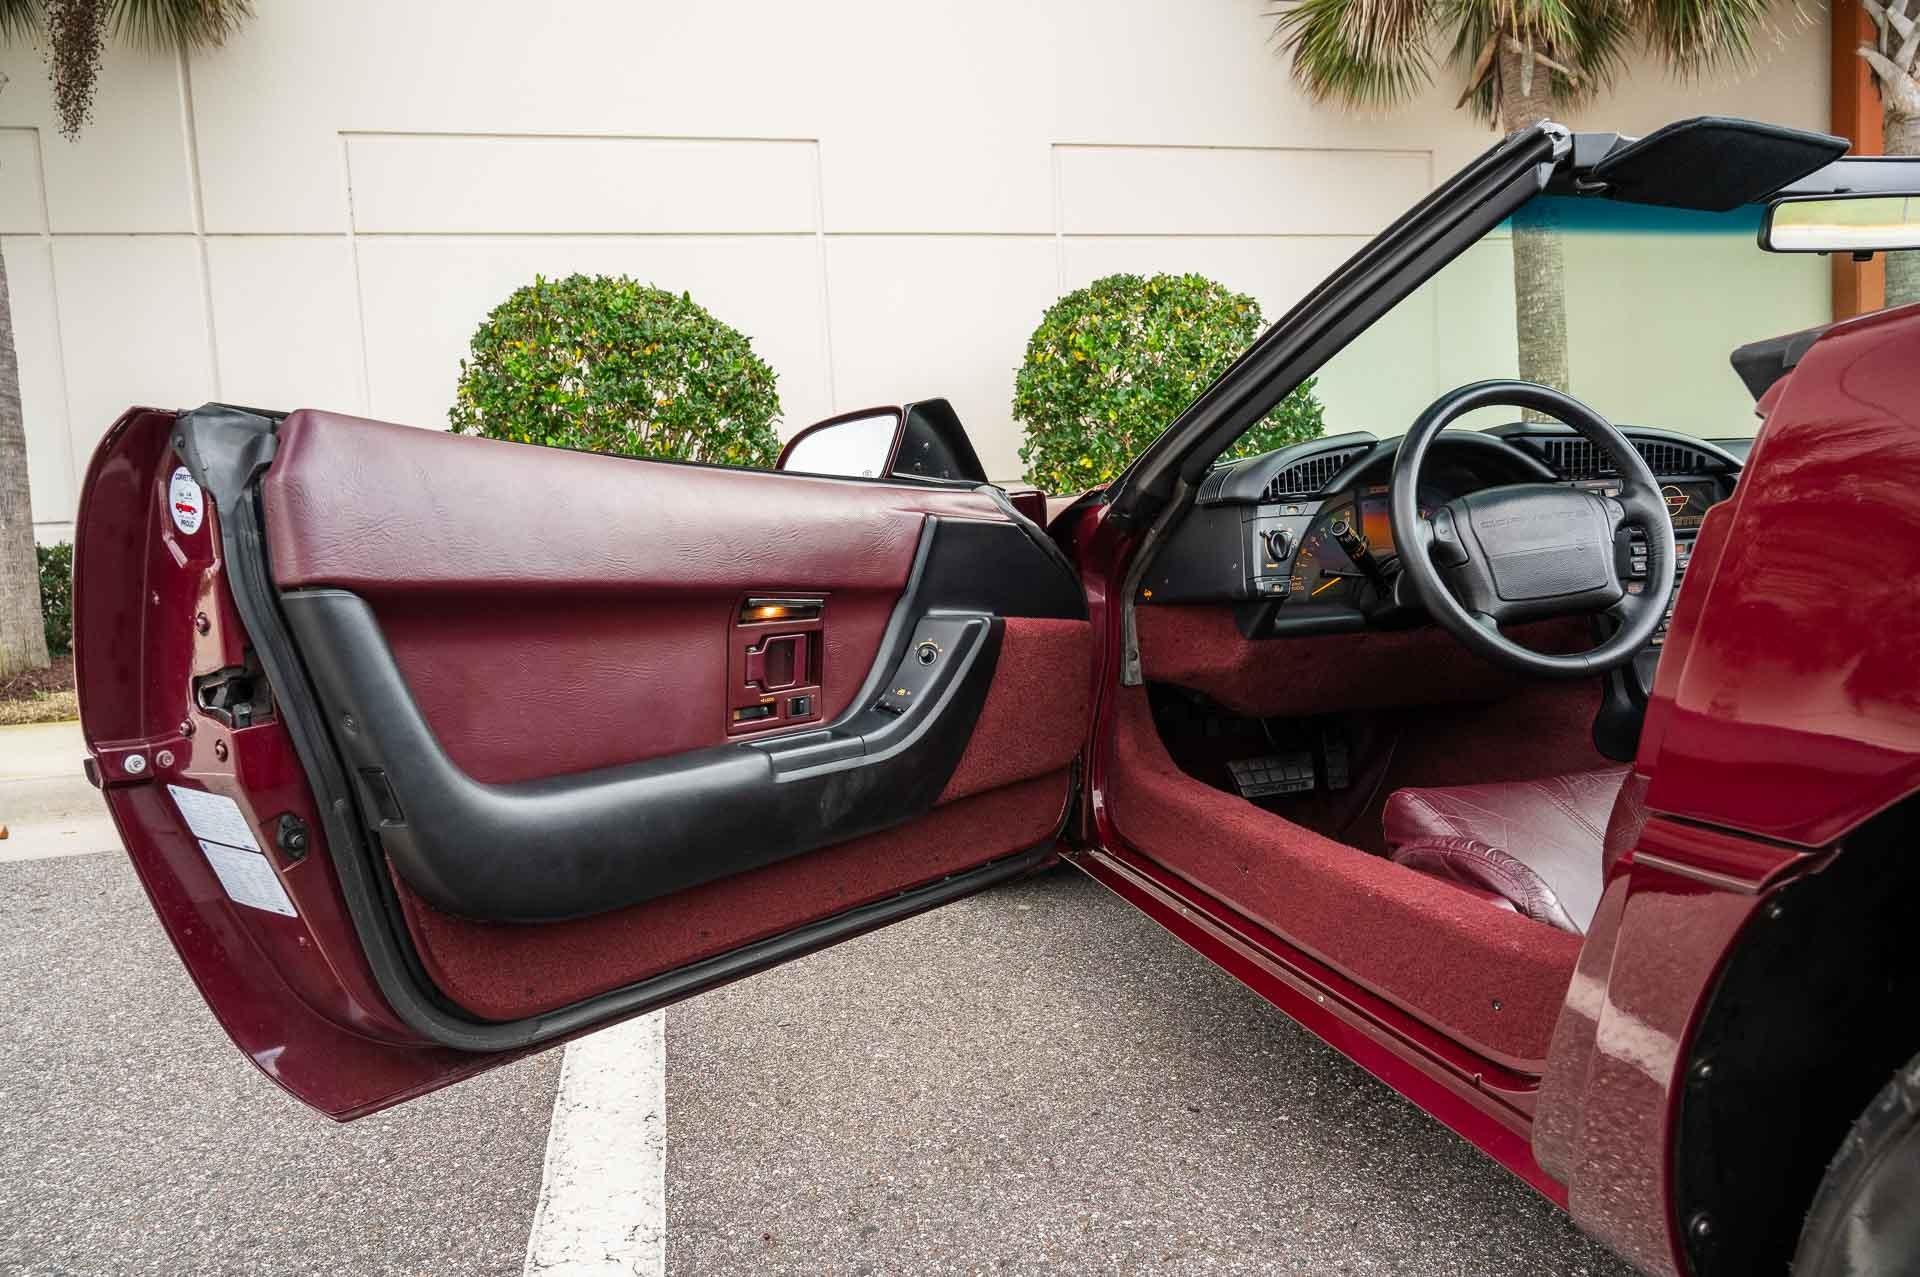 1993 CHEVROLET Corvette Convertible - $29,993